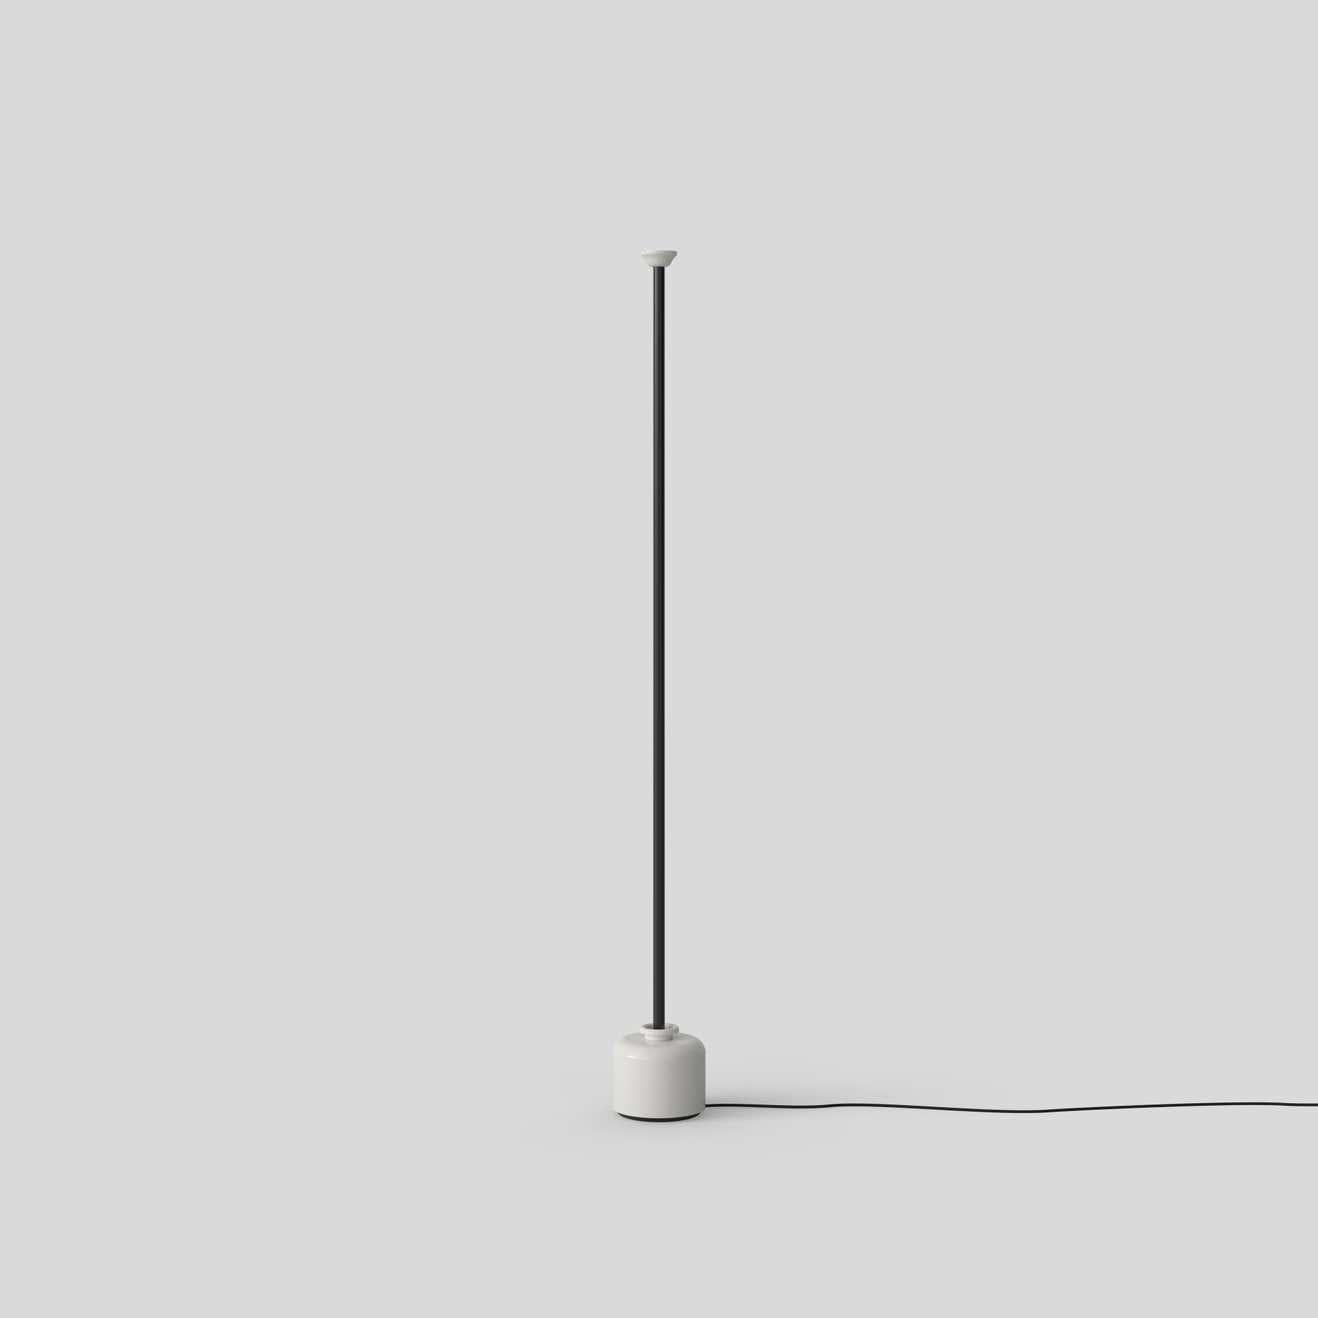 Italian Gino Sarfatti Lamp Model 1095 by Astep For Sale